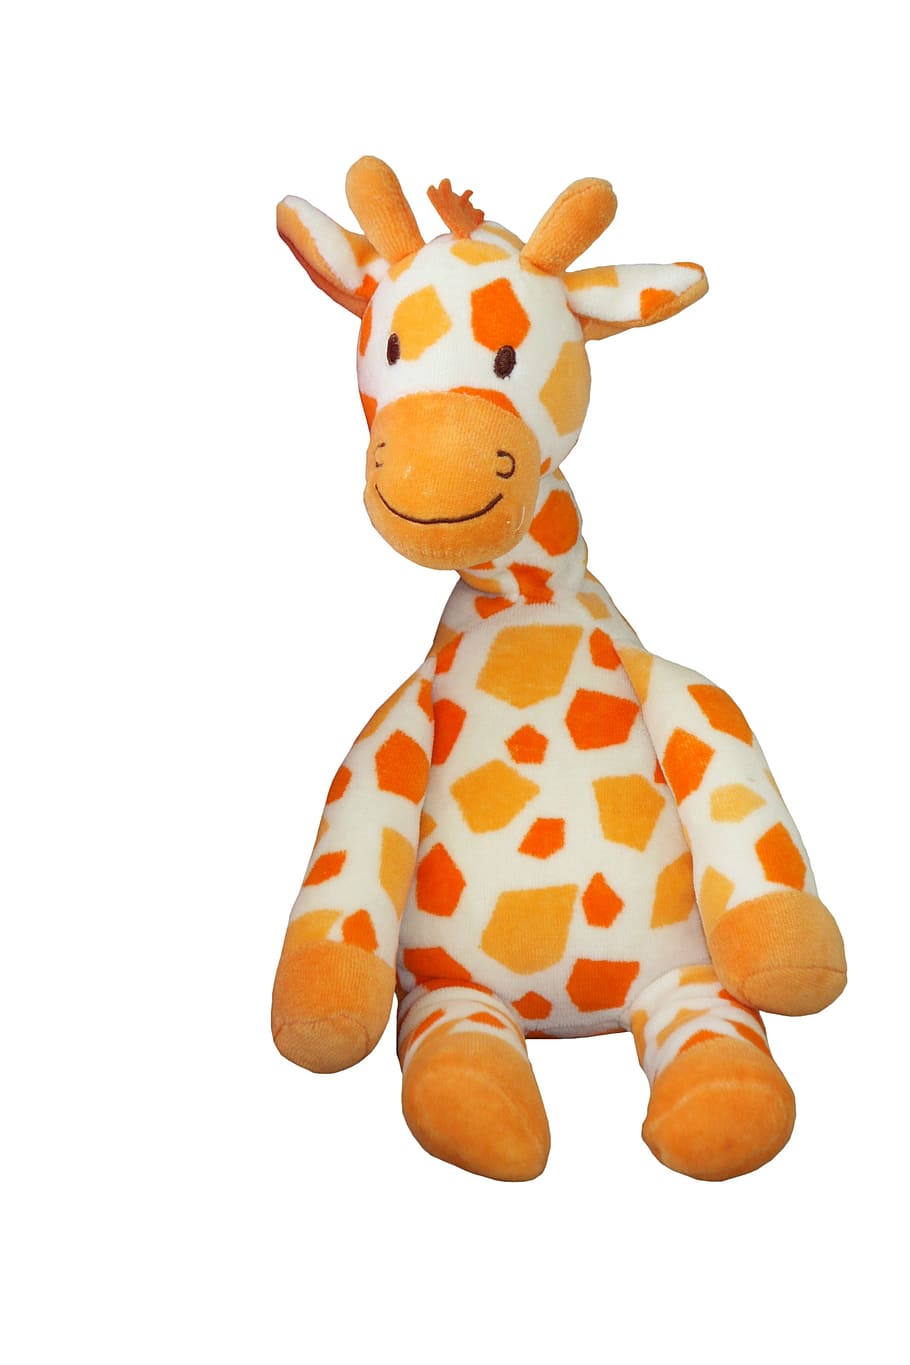 white, orange, red, giraffe, plush, toy, plush toy, giraffe plush toy, stuffed, animal